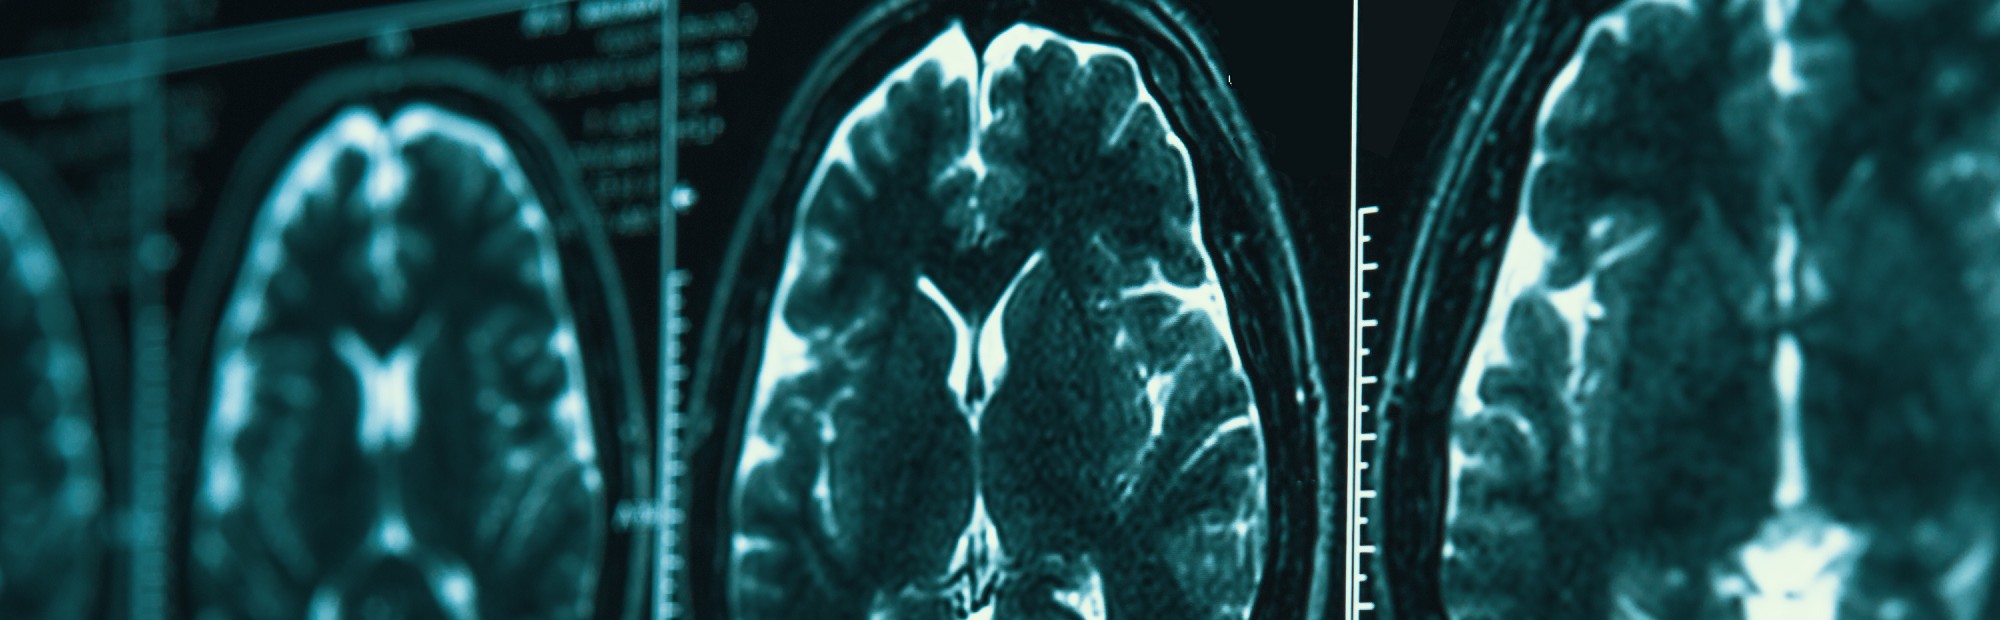 MRI brain scan images 